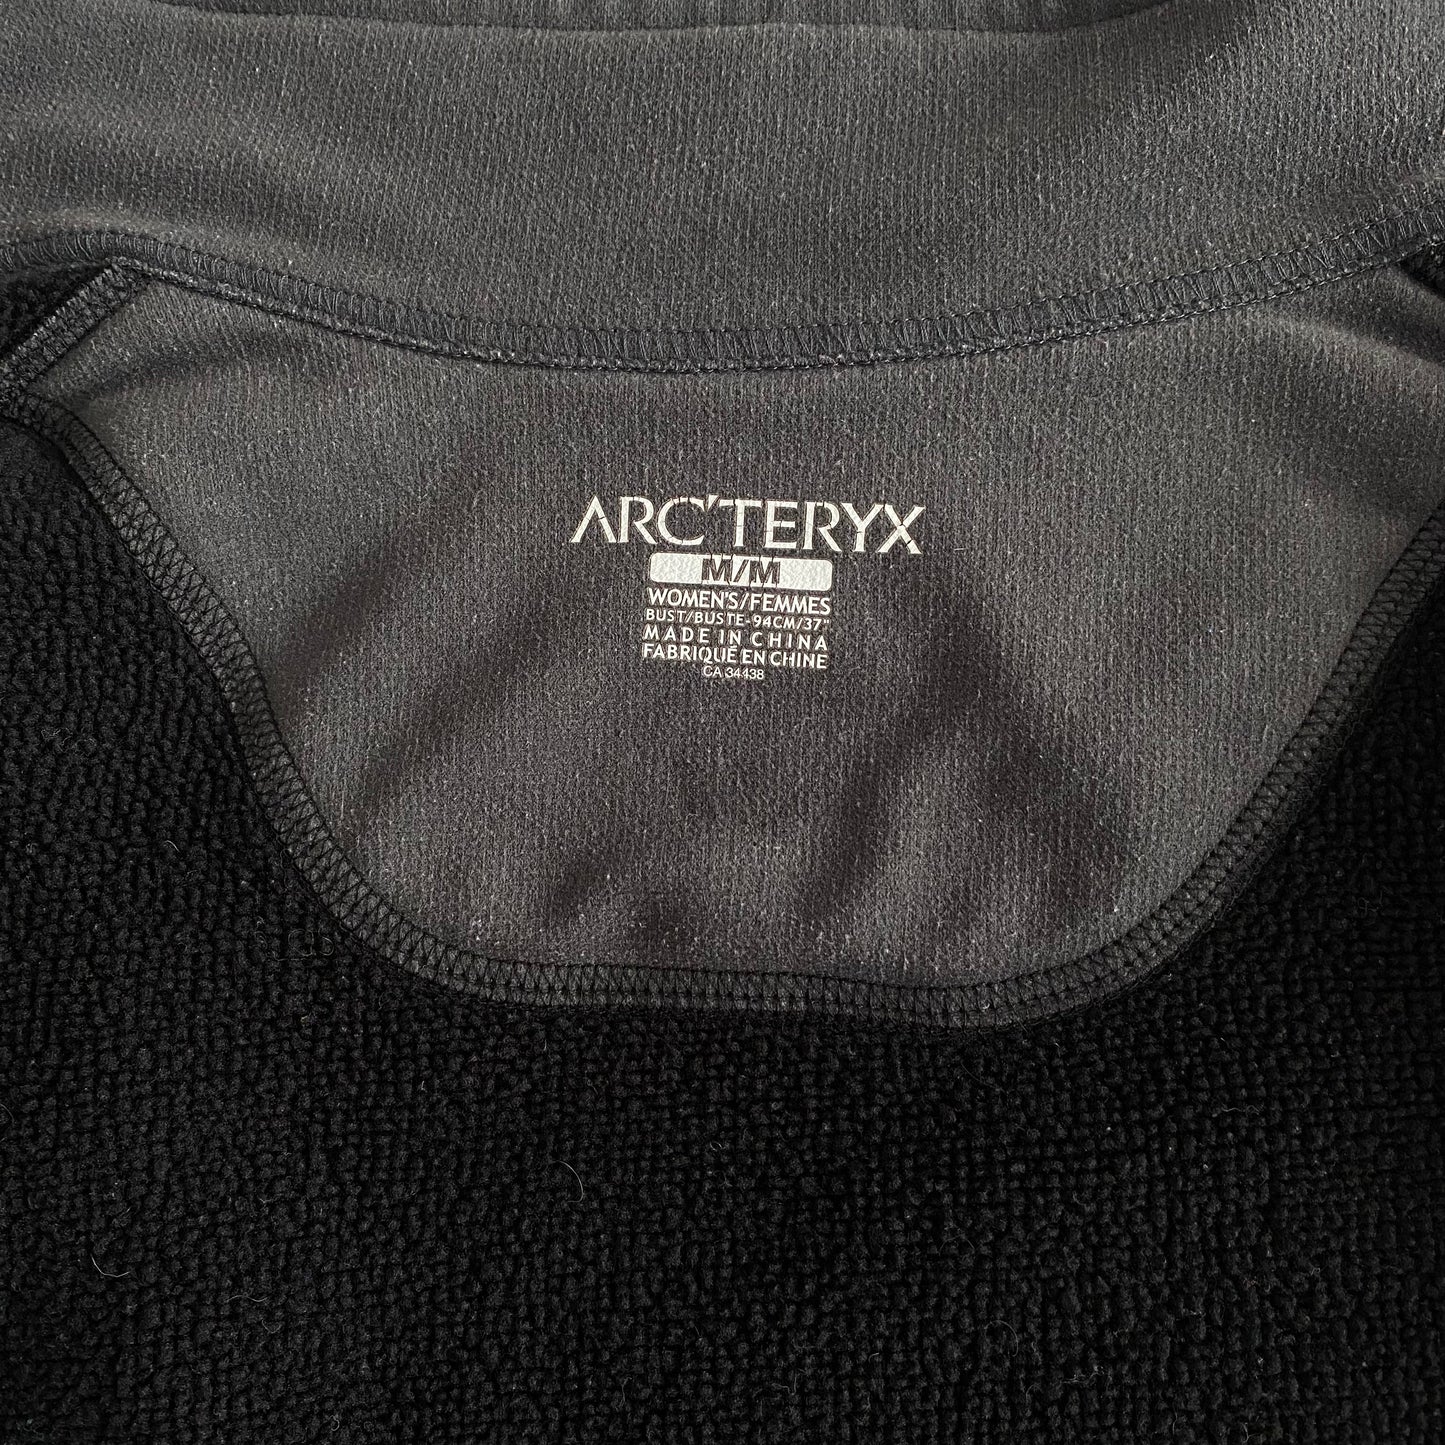 Arcteryx Covert Cardigan Size Small-Medium